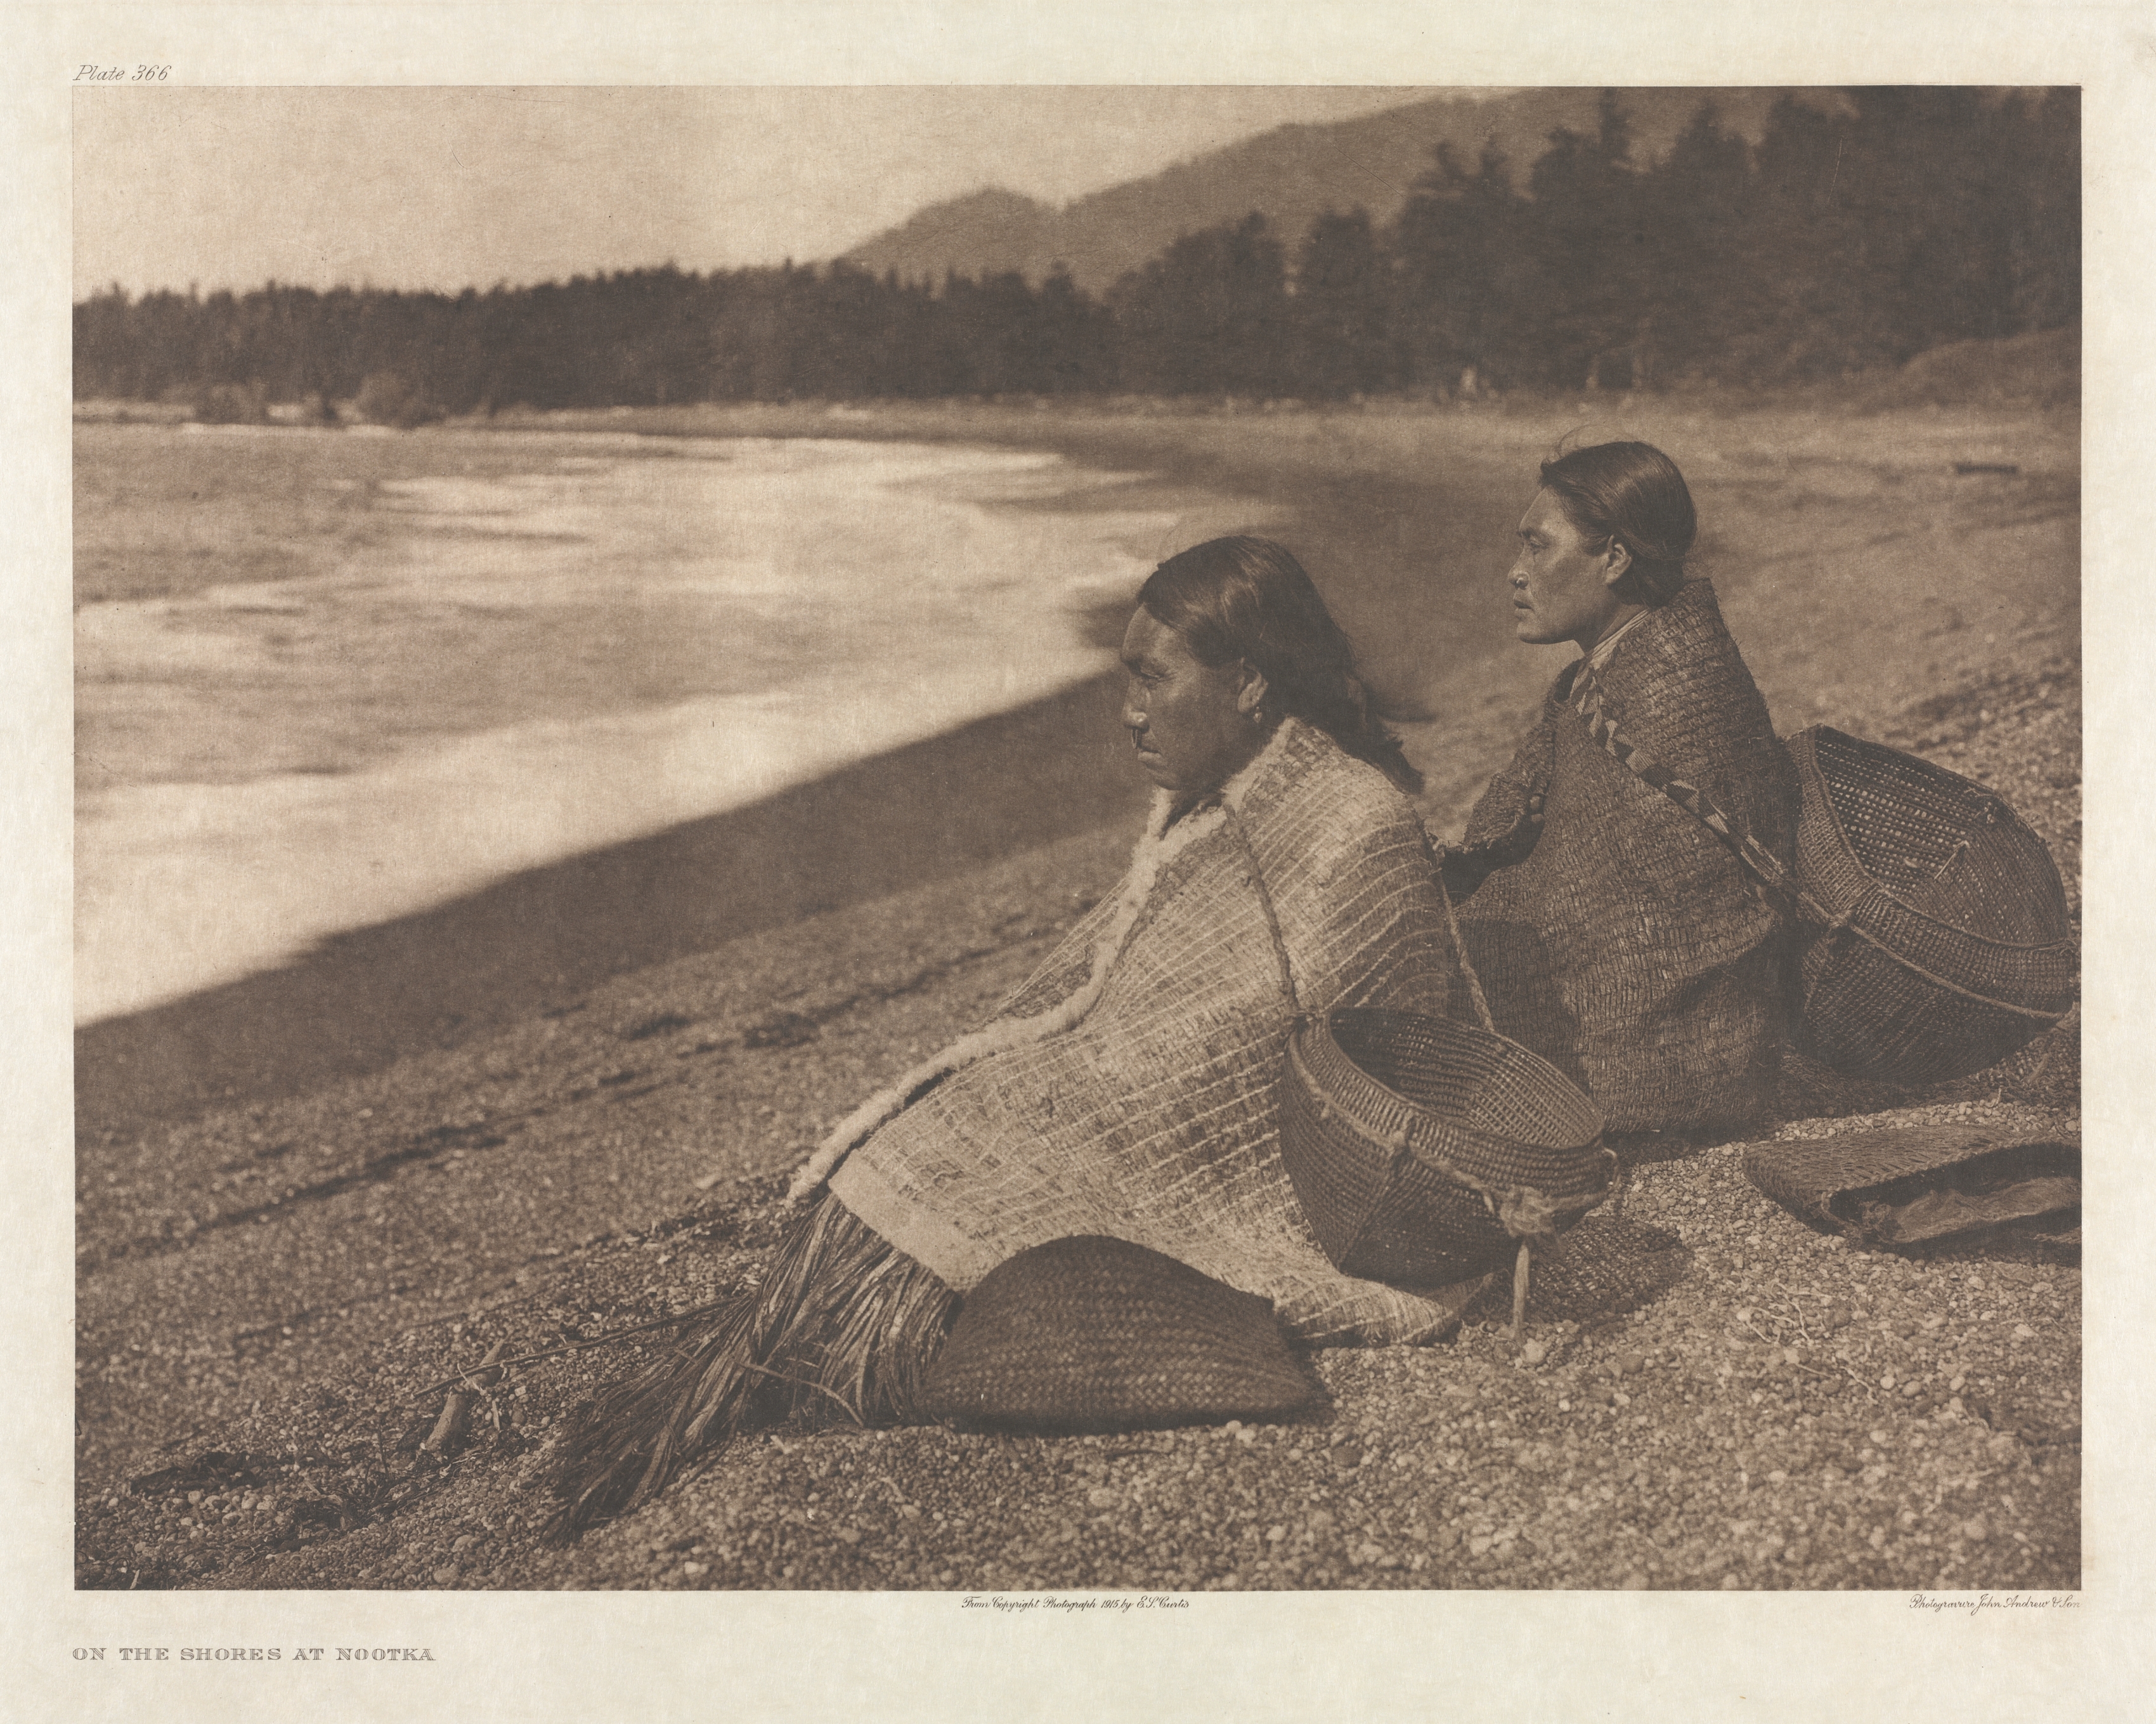 Portfolio XI, Plate 366: On the Shores at Nootka